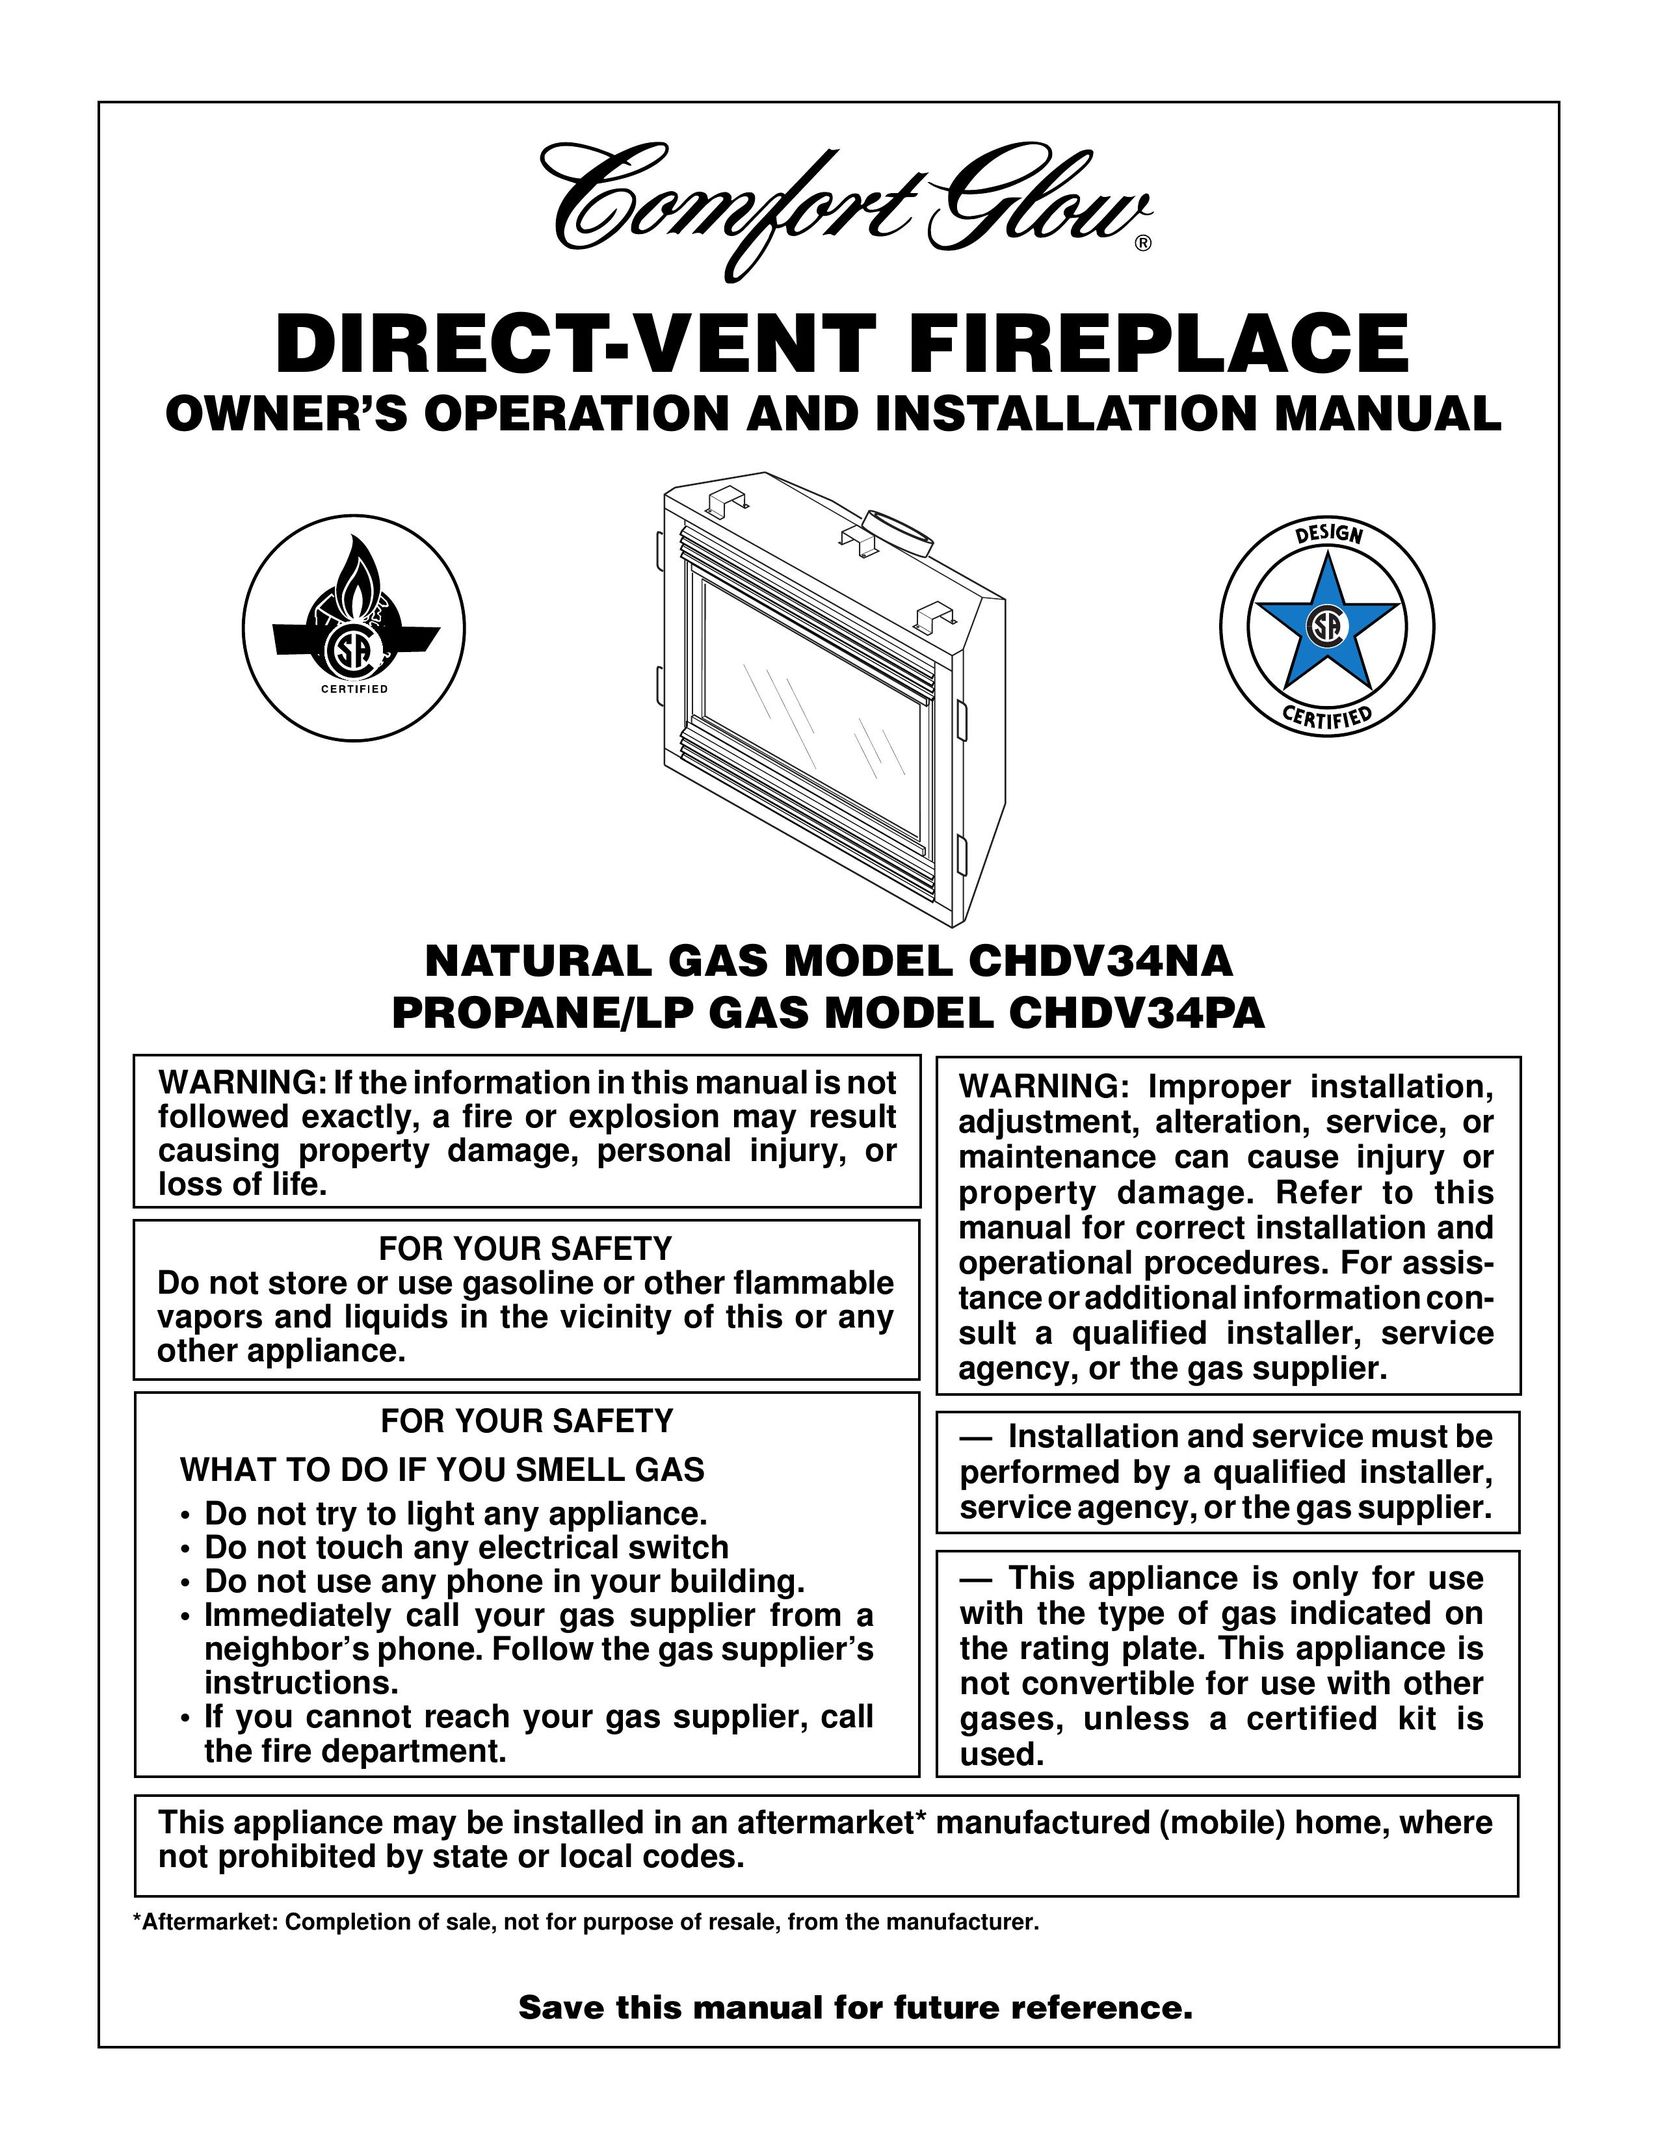 Desa Tech CHDV34PA Indoor Fireplace User Manual